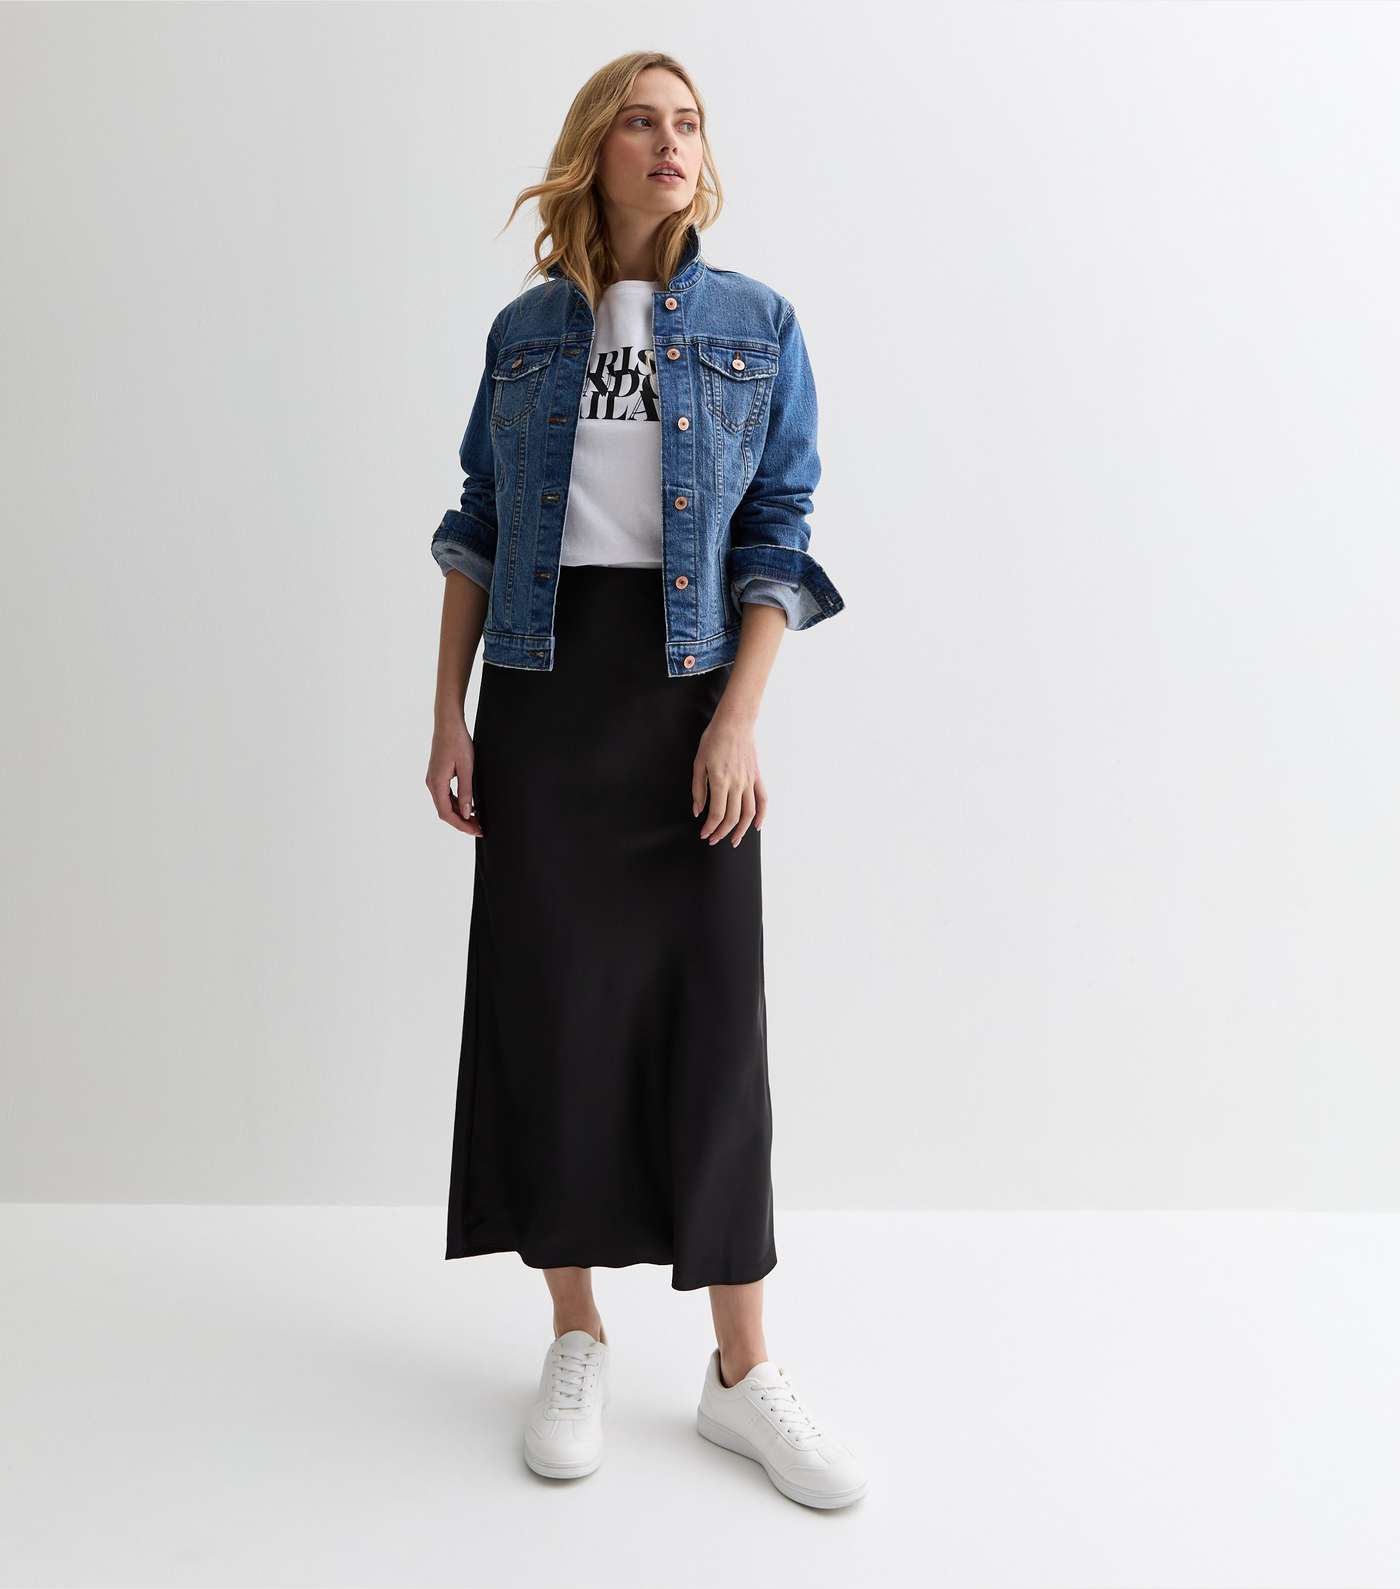 Black Satin Bias Cut Midi Skirt Image 3